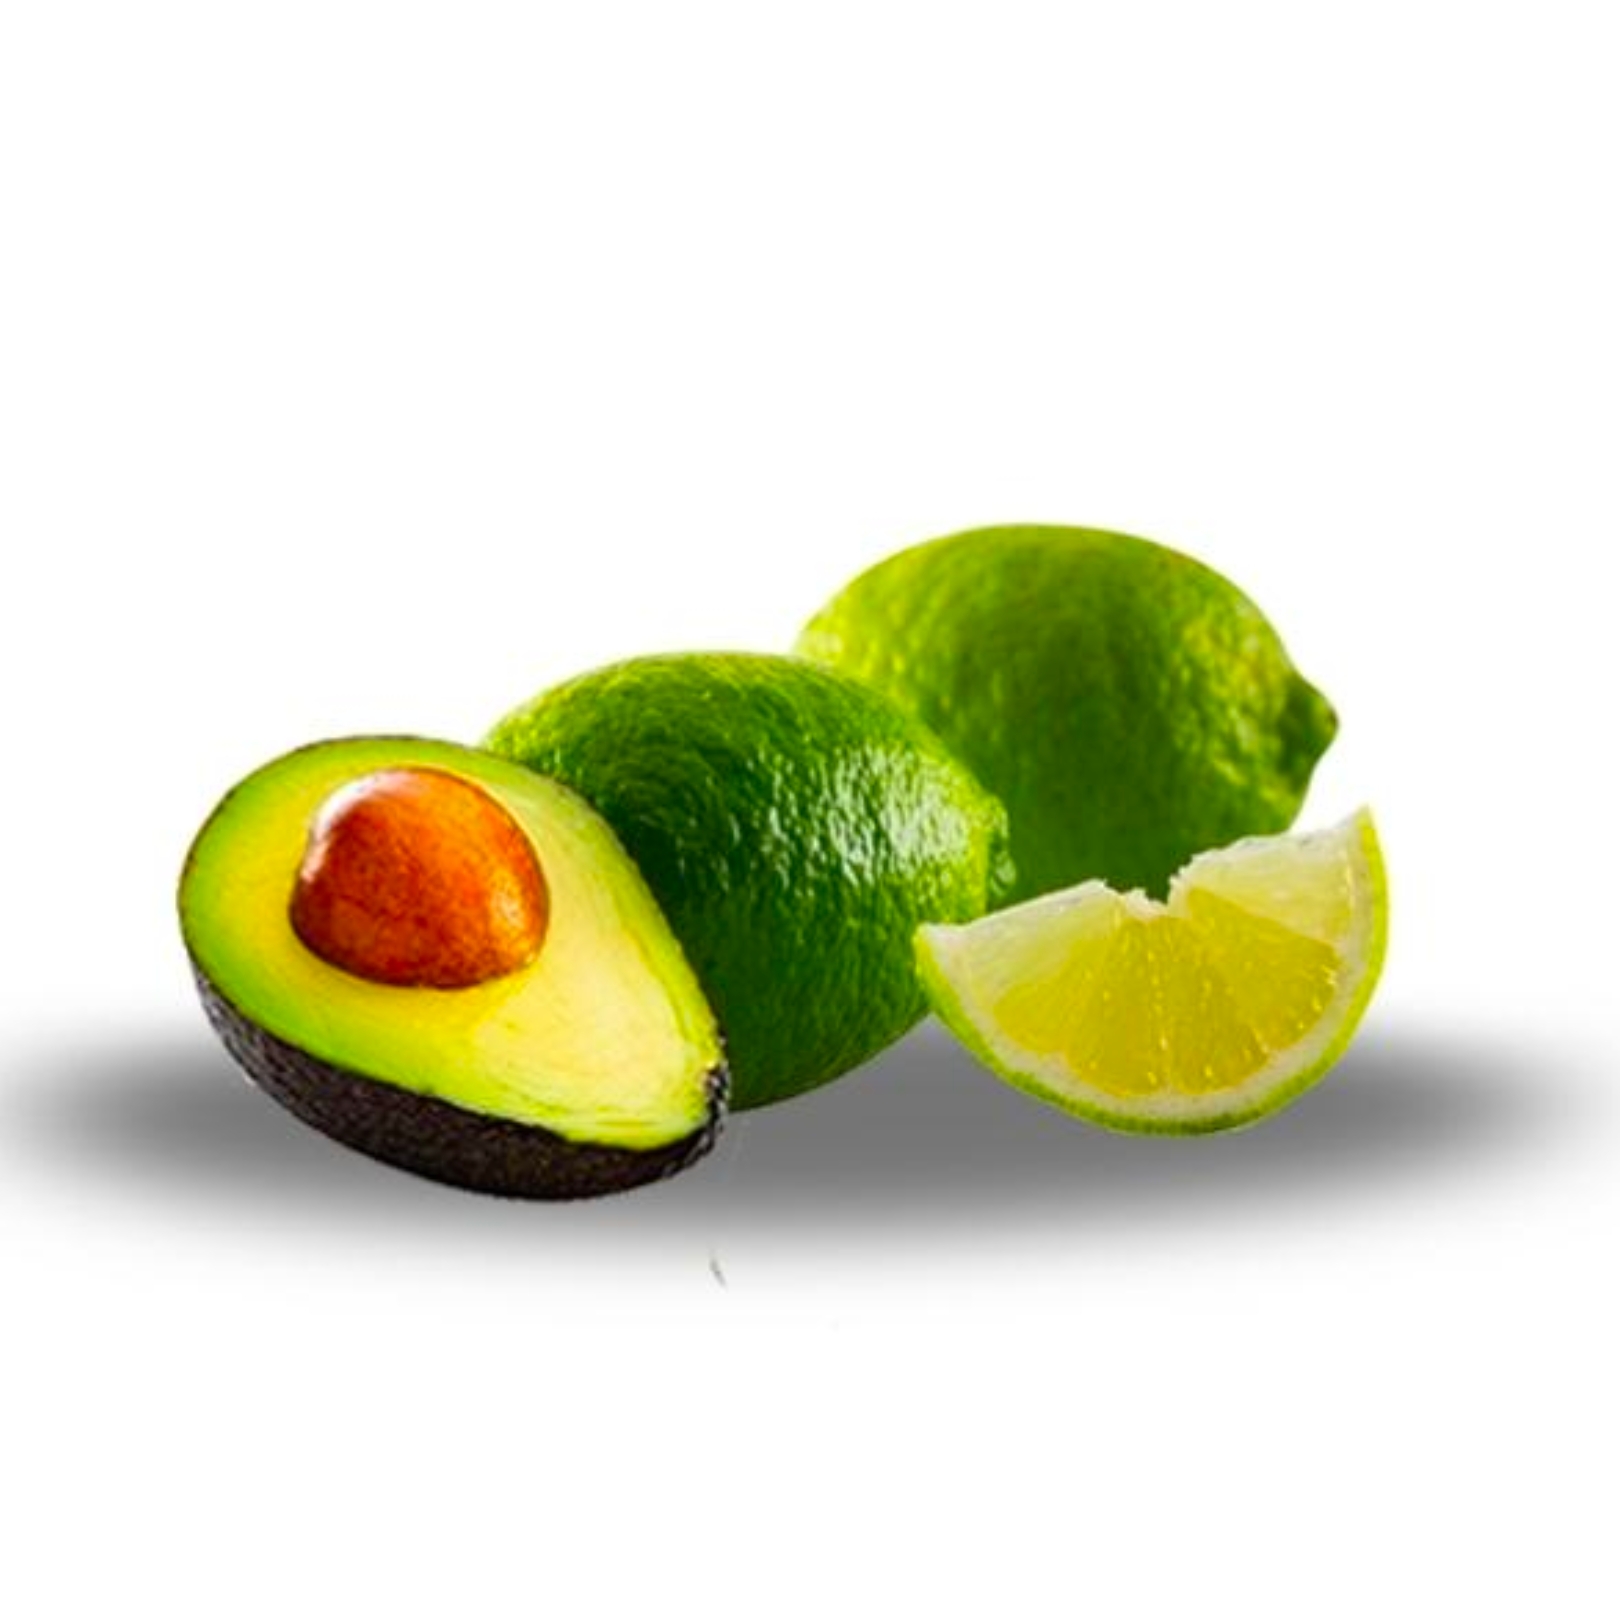 Buy Avocado Lime Online NZ